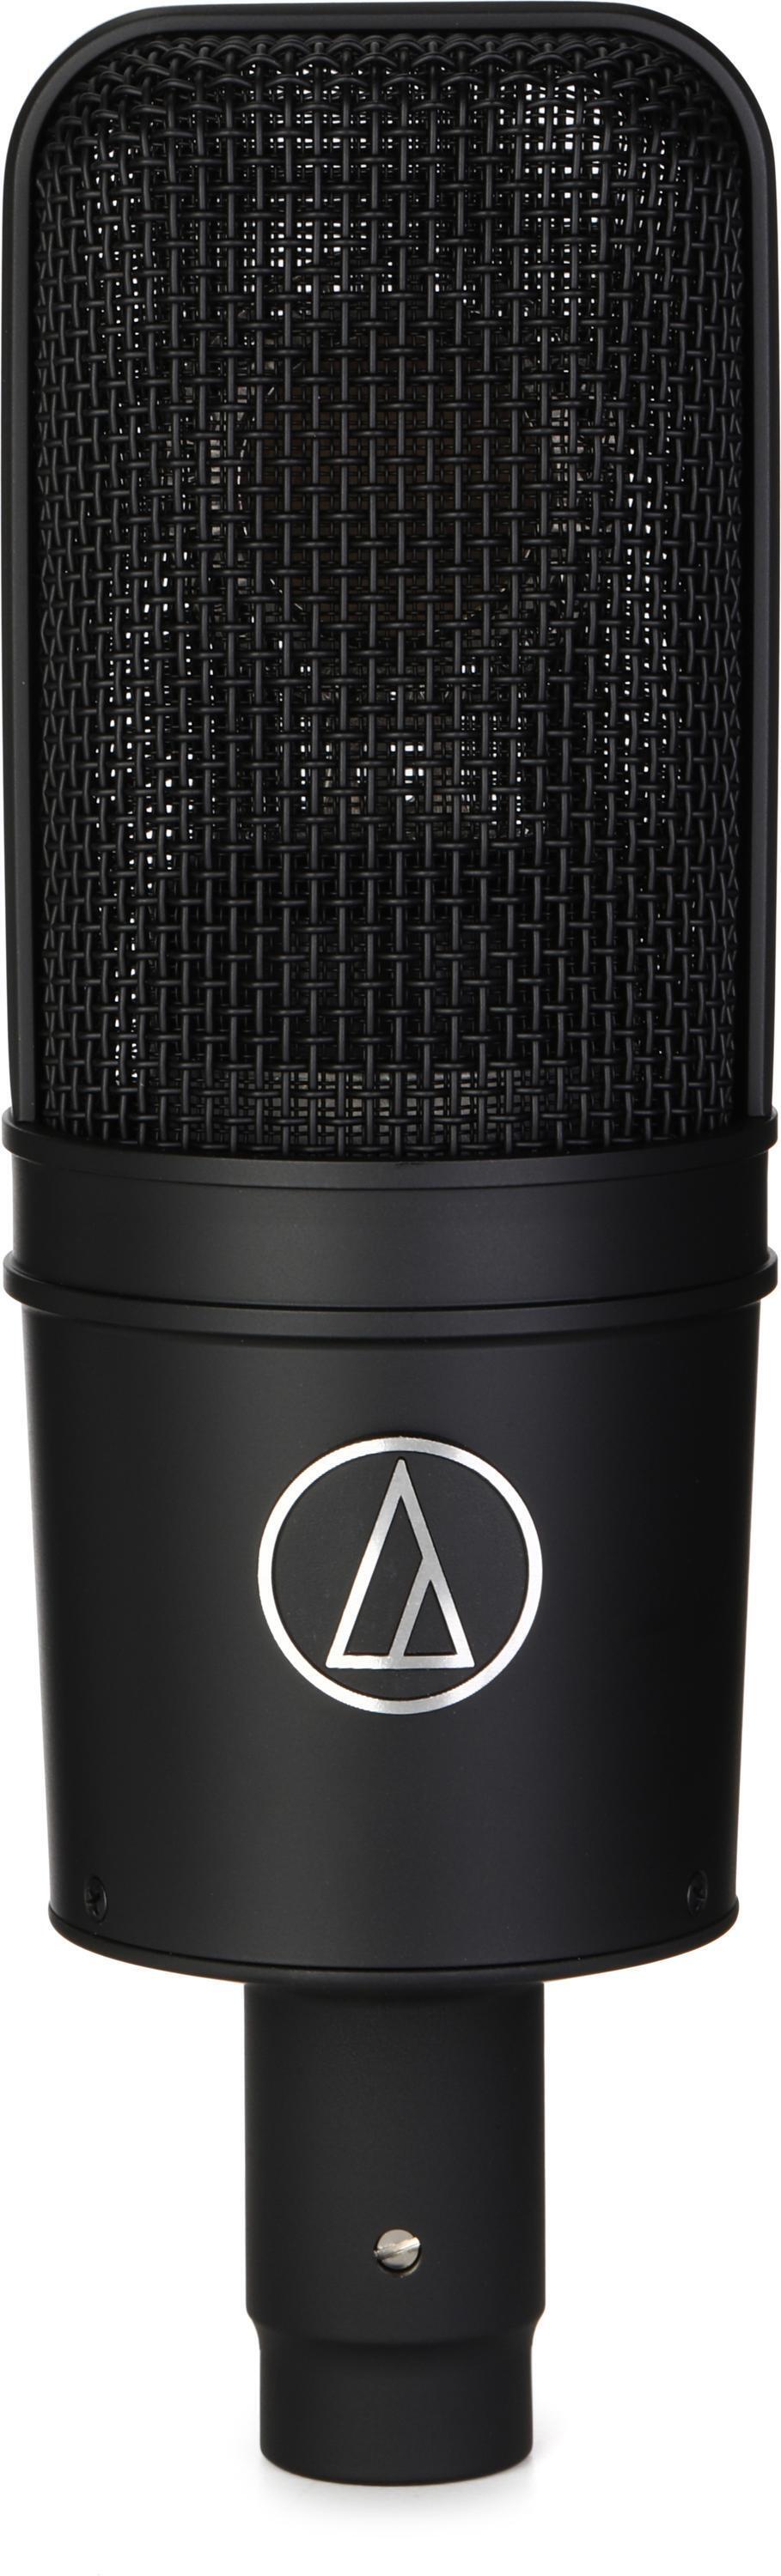 Bundled Item: Audio-Technica AT4040 Large-diaphragm Condenser Microphone